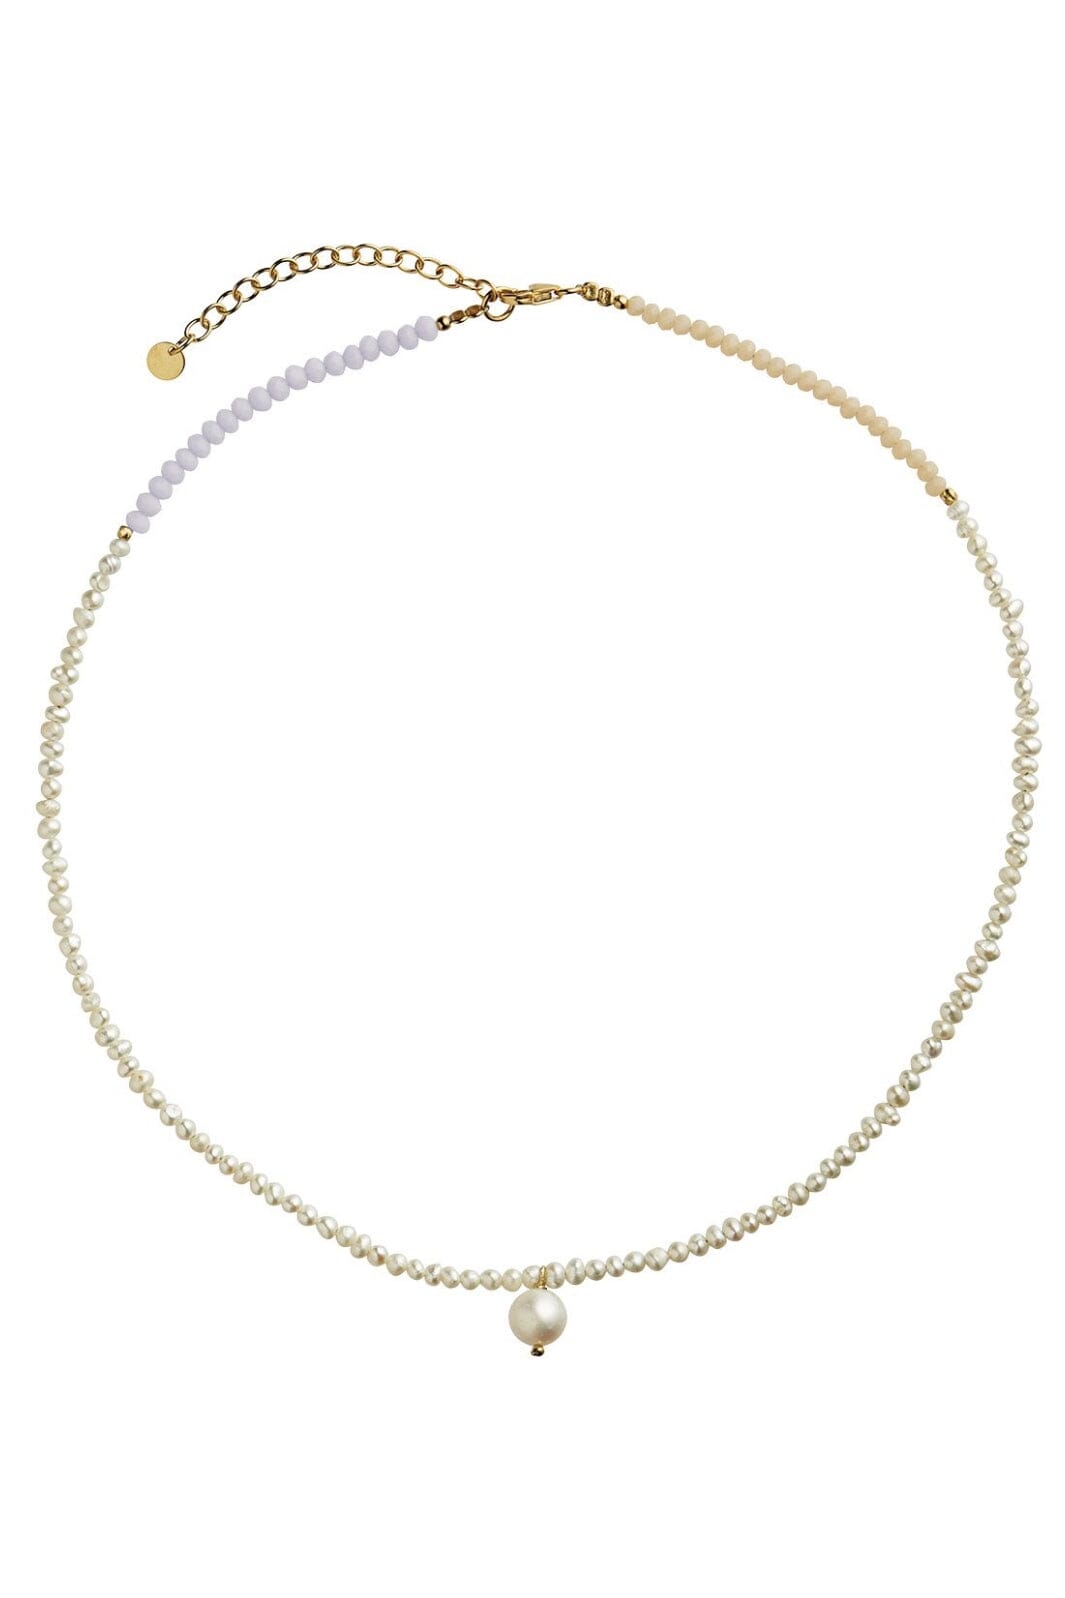 Stine A - Heavenly Pearl Dream Necklace Gold - Classy - 2045-02-Os Halskæder 